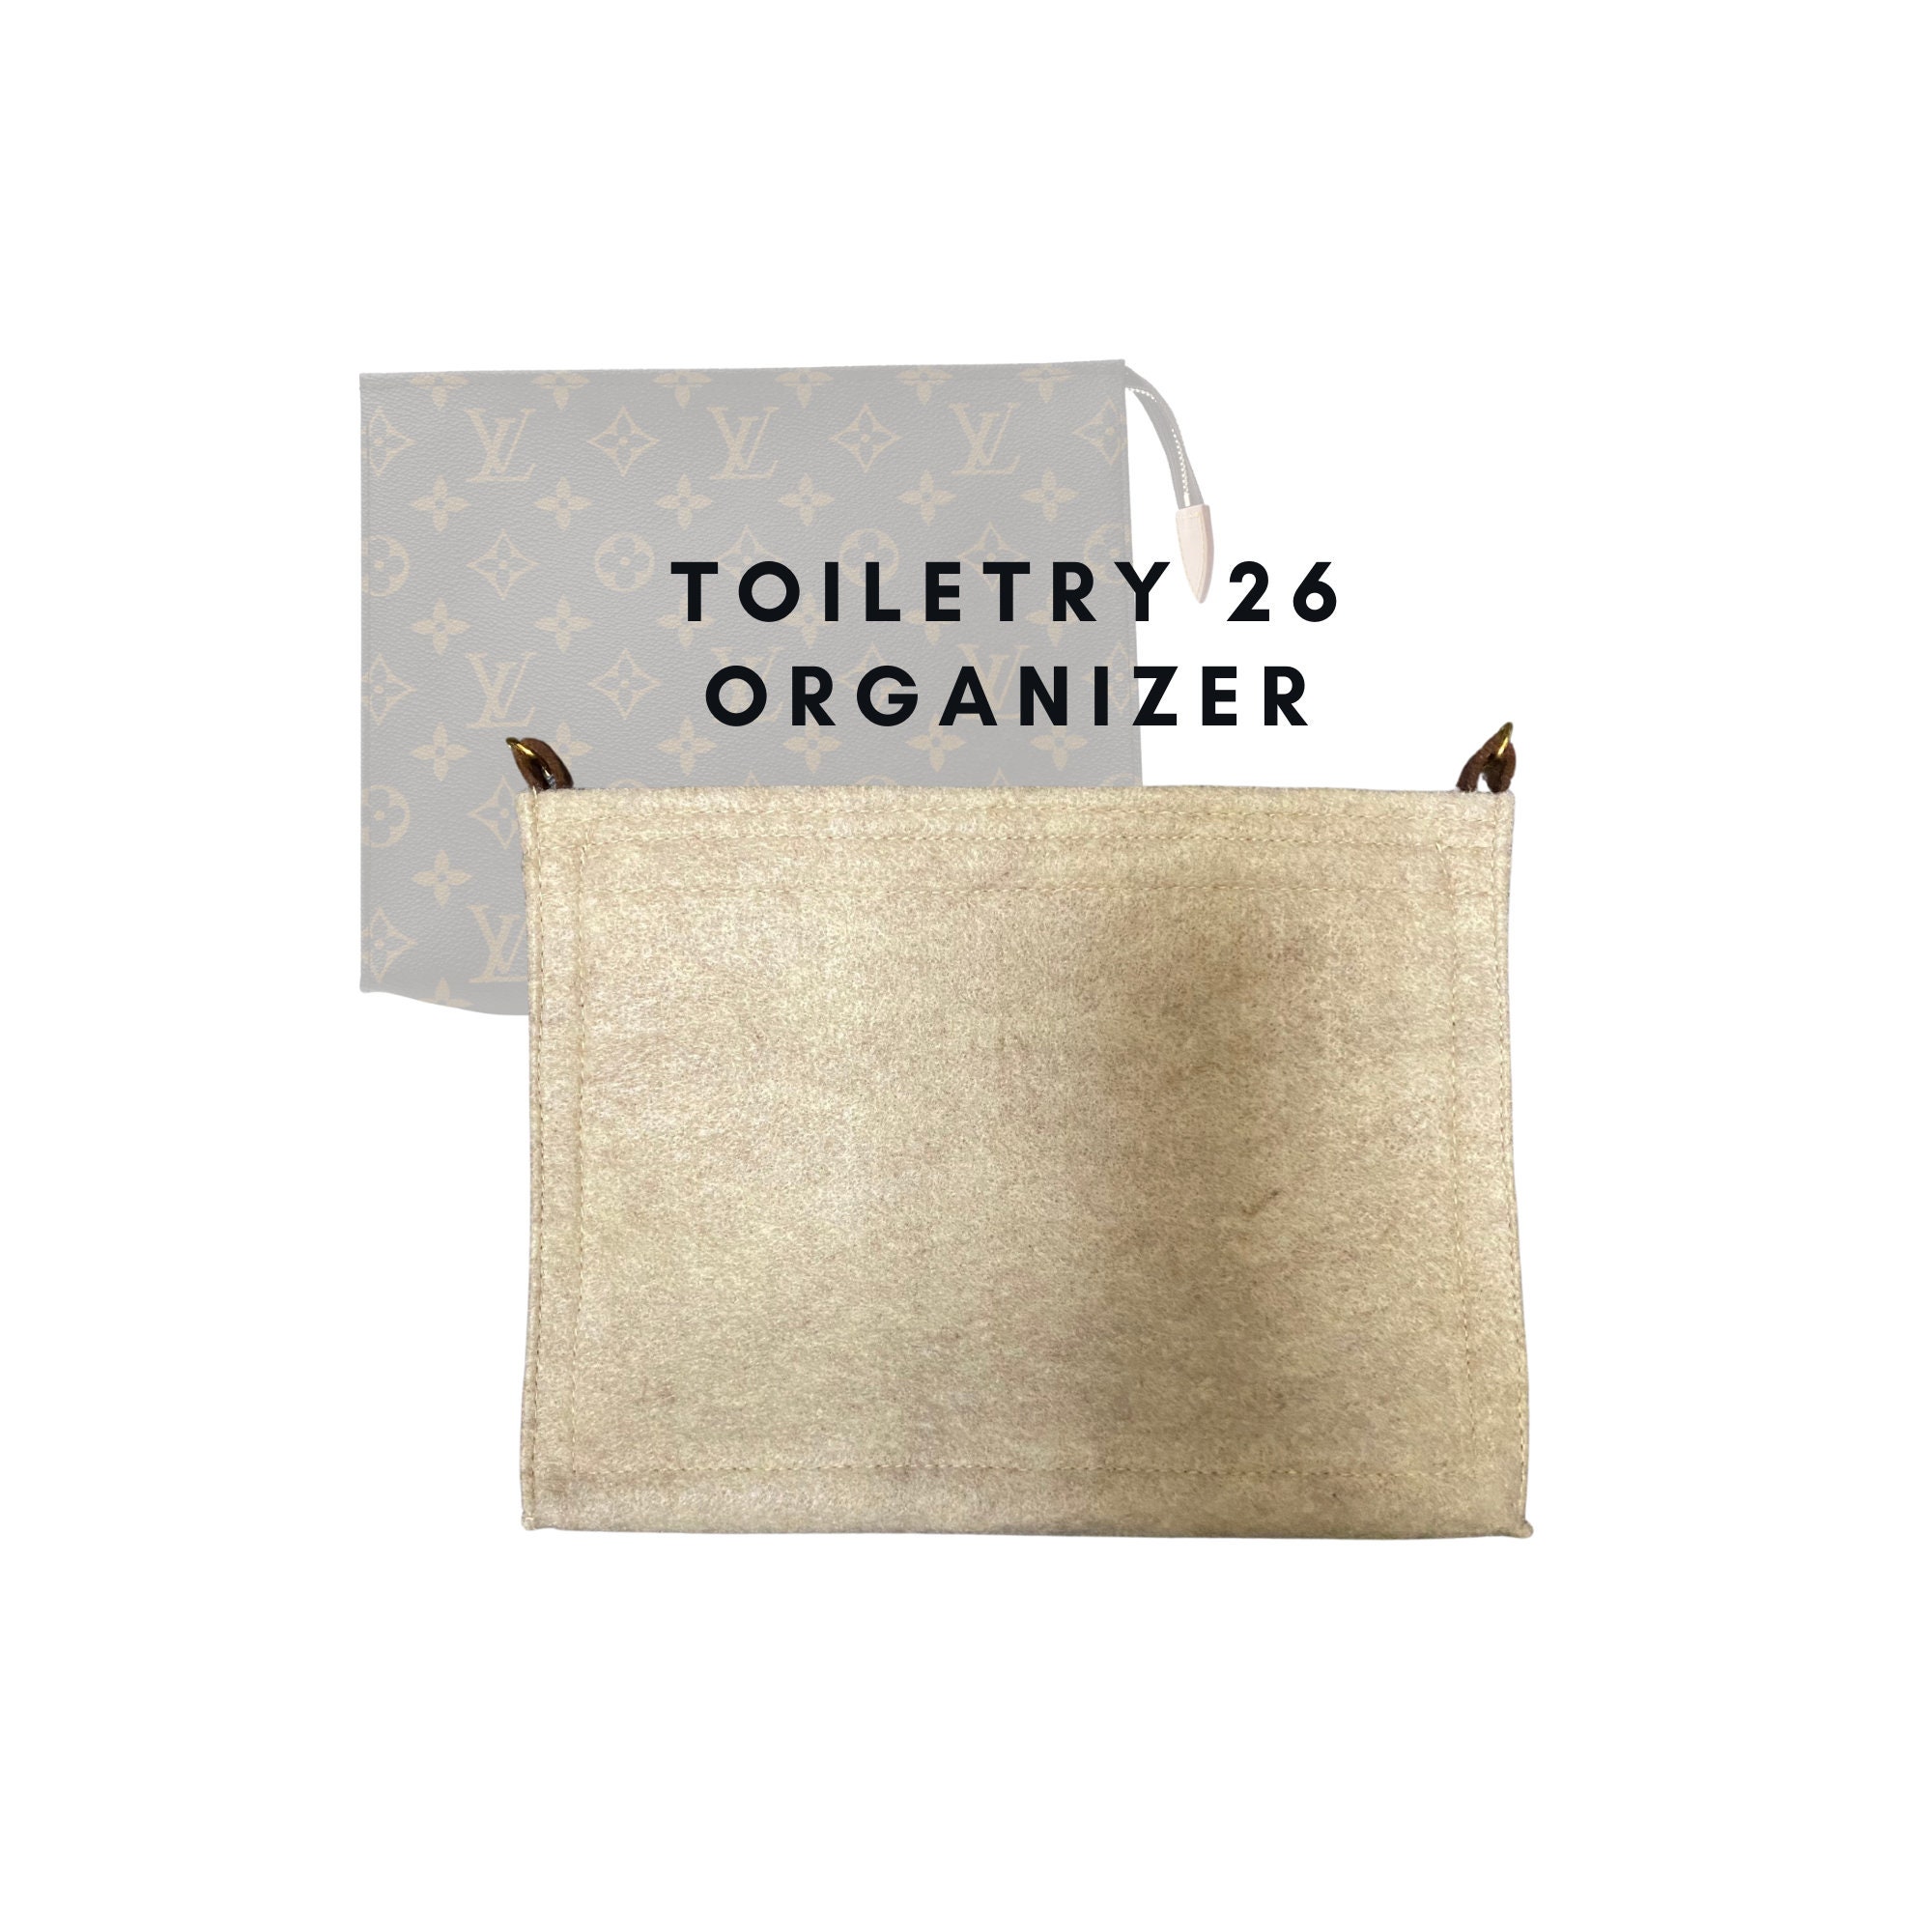 TOURDREAM Purse Organizer Insert Fit Toiletry Pouch 26 19 Handbag Shaper Premium Microfiber with Gold Buckles (Toiletry Pouch 26, Khaki)